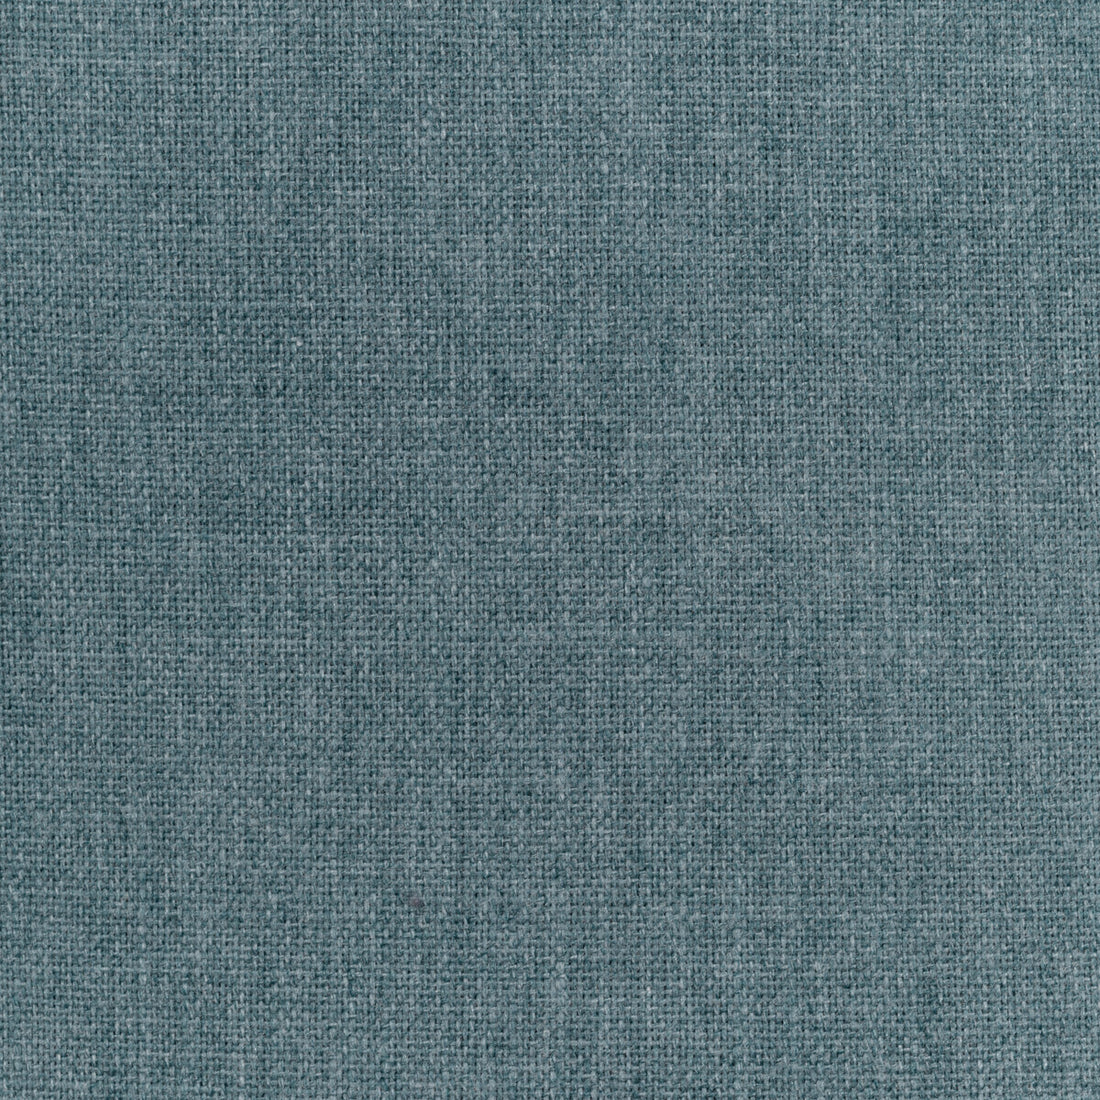 Kravet Smart fabric in 36112-521 color - pattern 36112.521.0 - by Kravet Smart in the Performance Kravetarmor collection